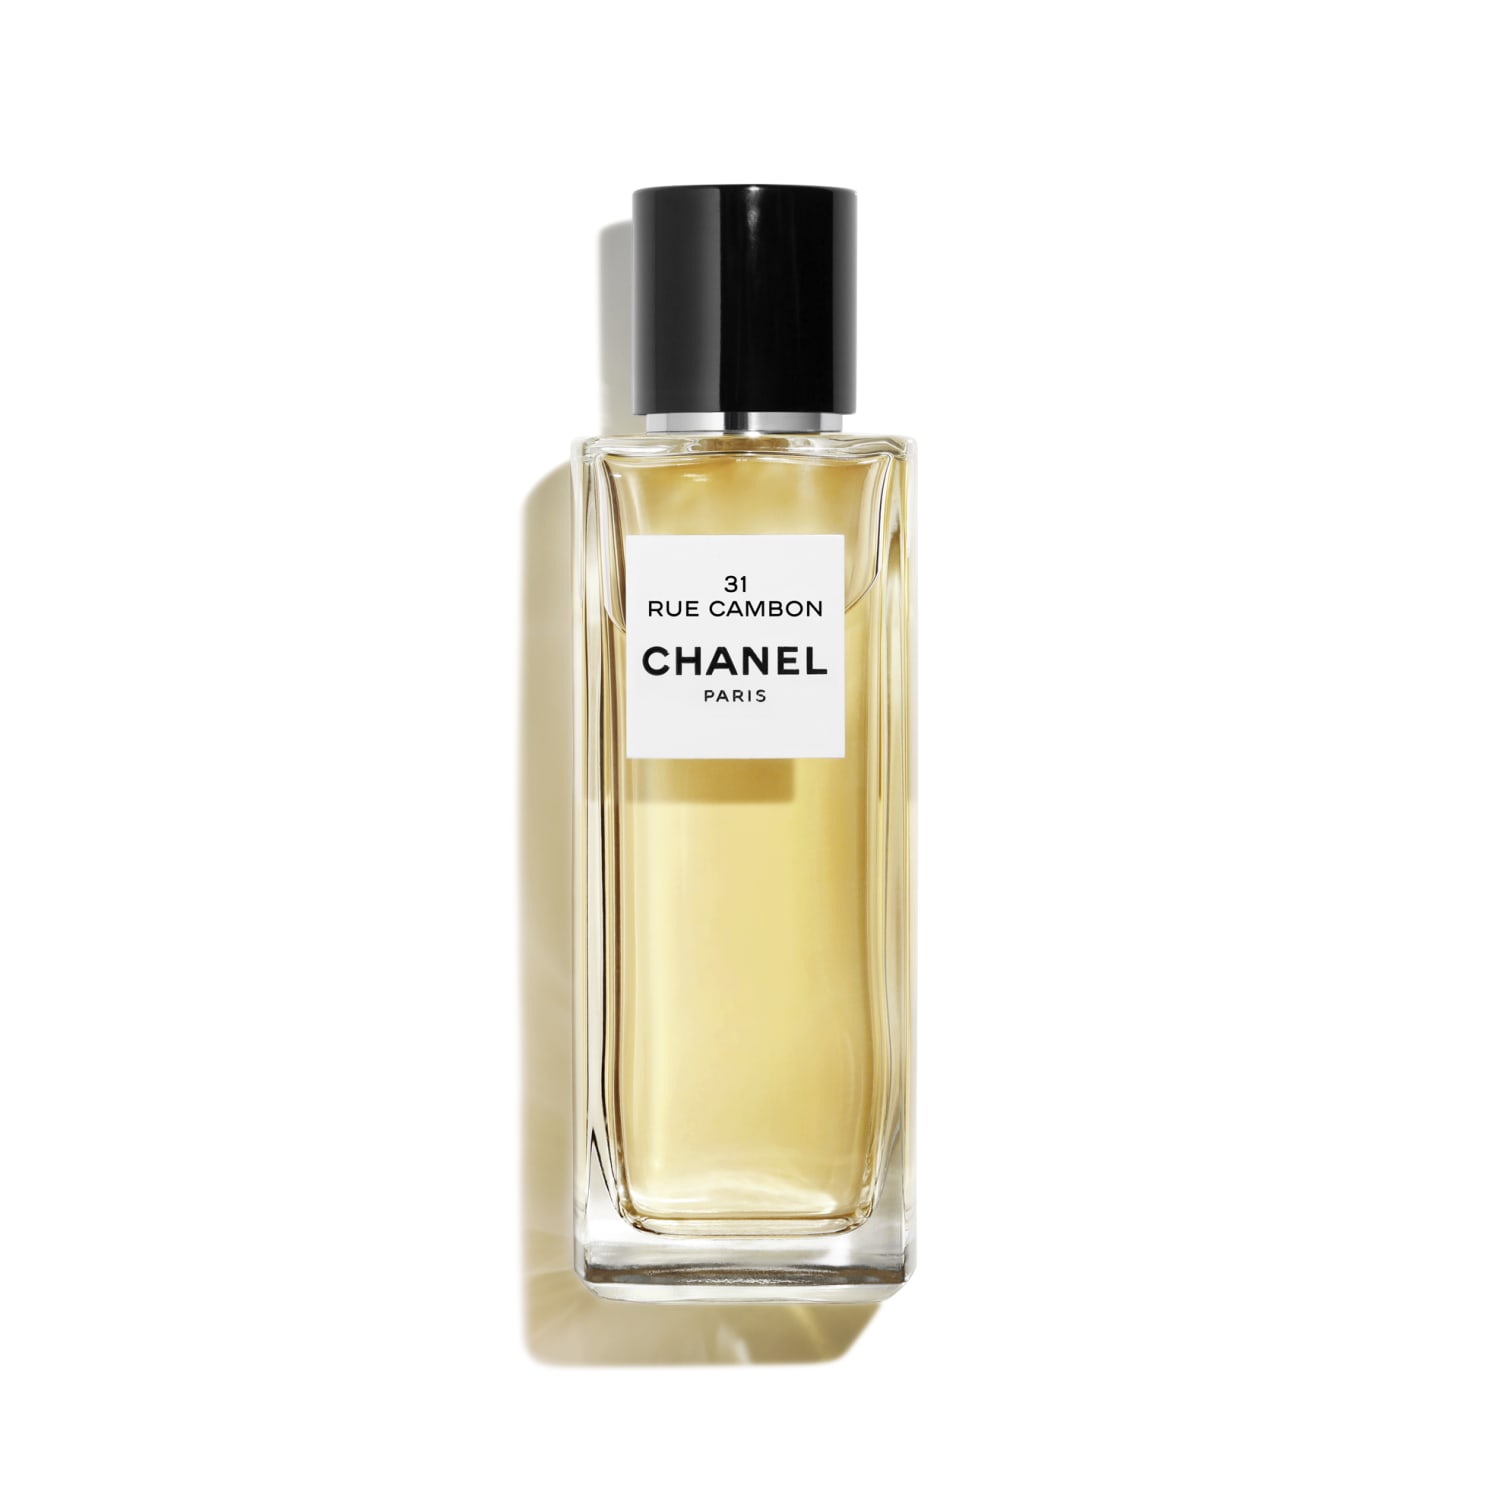 31 Rue Cambon Eau de Parfum Chanel perfume - a new fragrance for women 2016